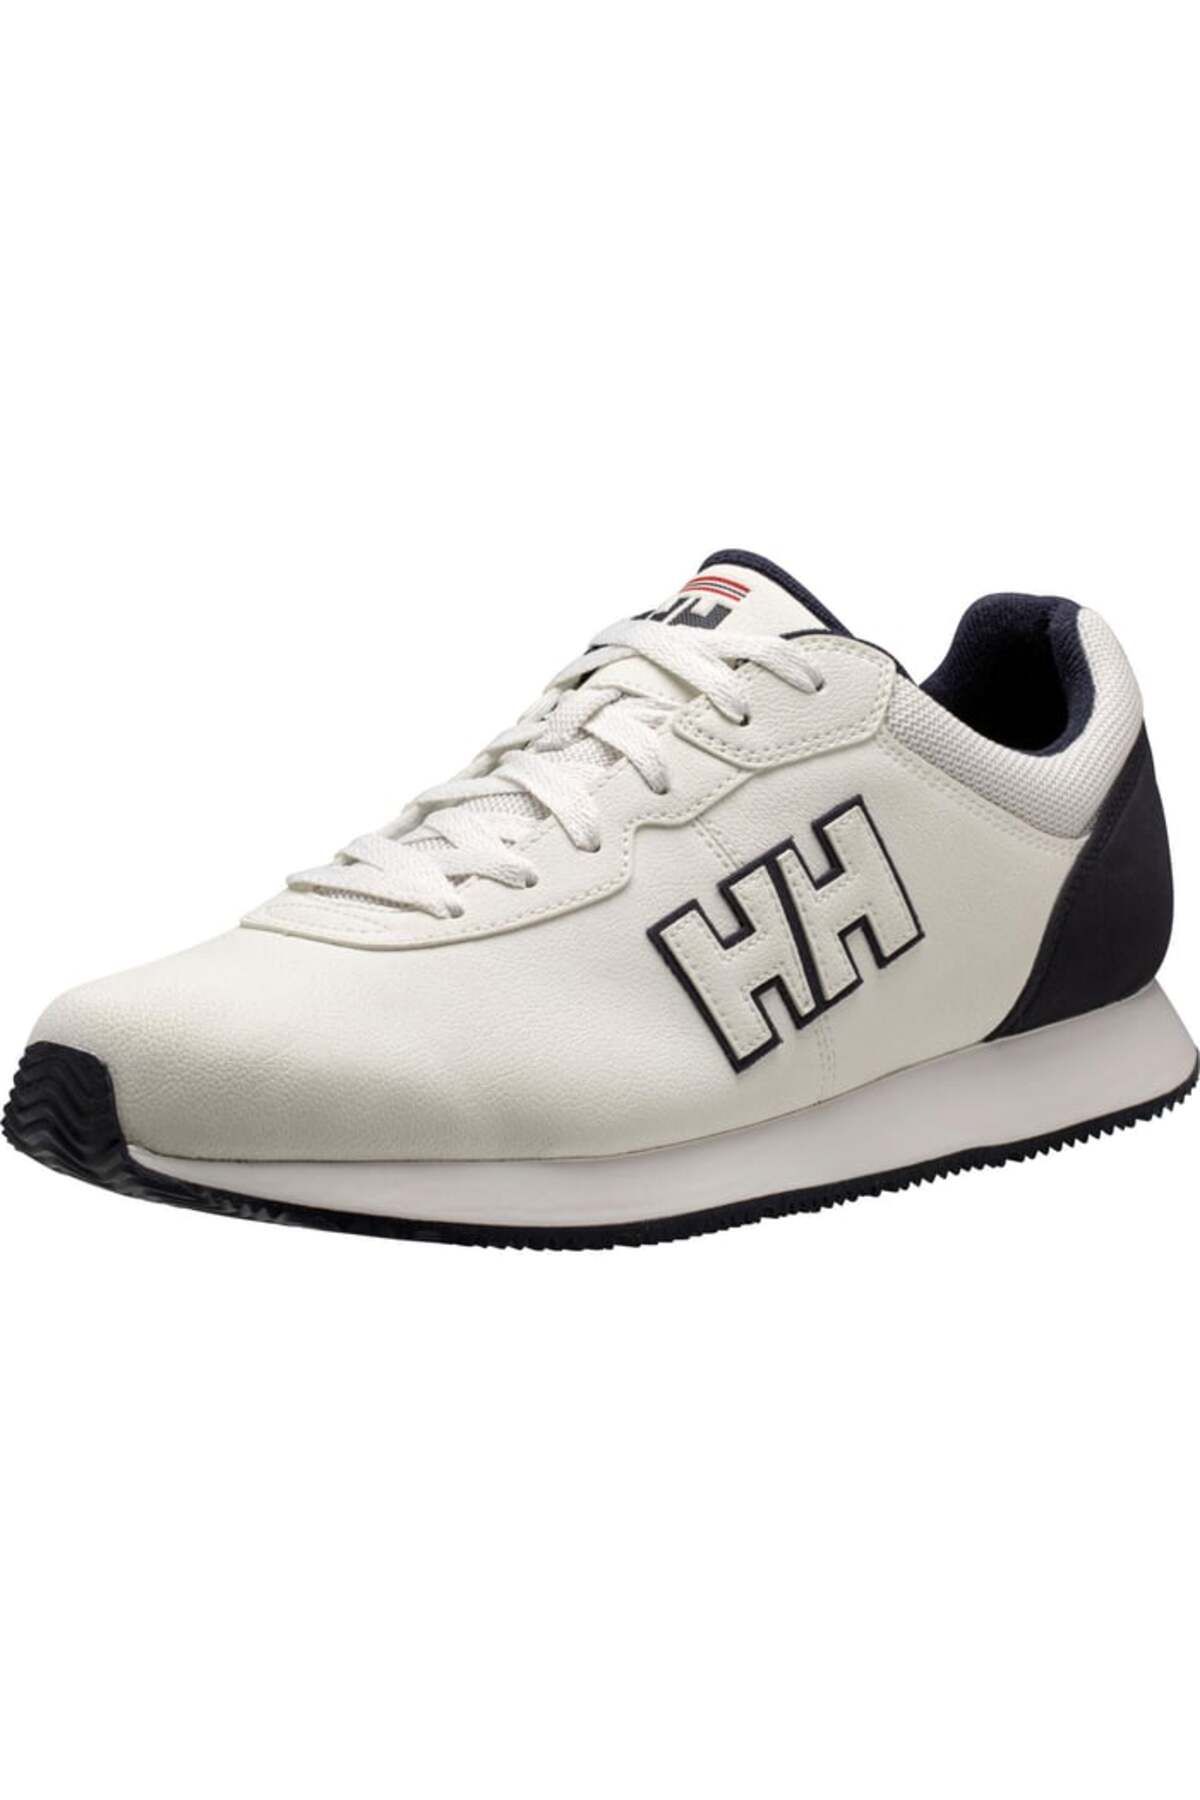 Helly Hansen Helly Hansen Brecken Herıtage Ayakkabı Erkek Beyaz Spor Ayakkabı Hha.11947-hha.011